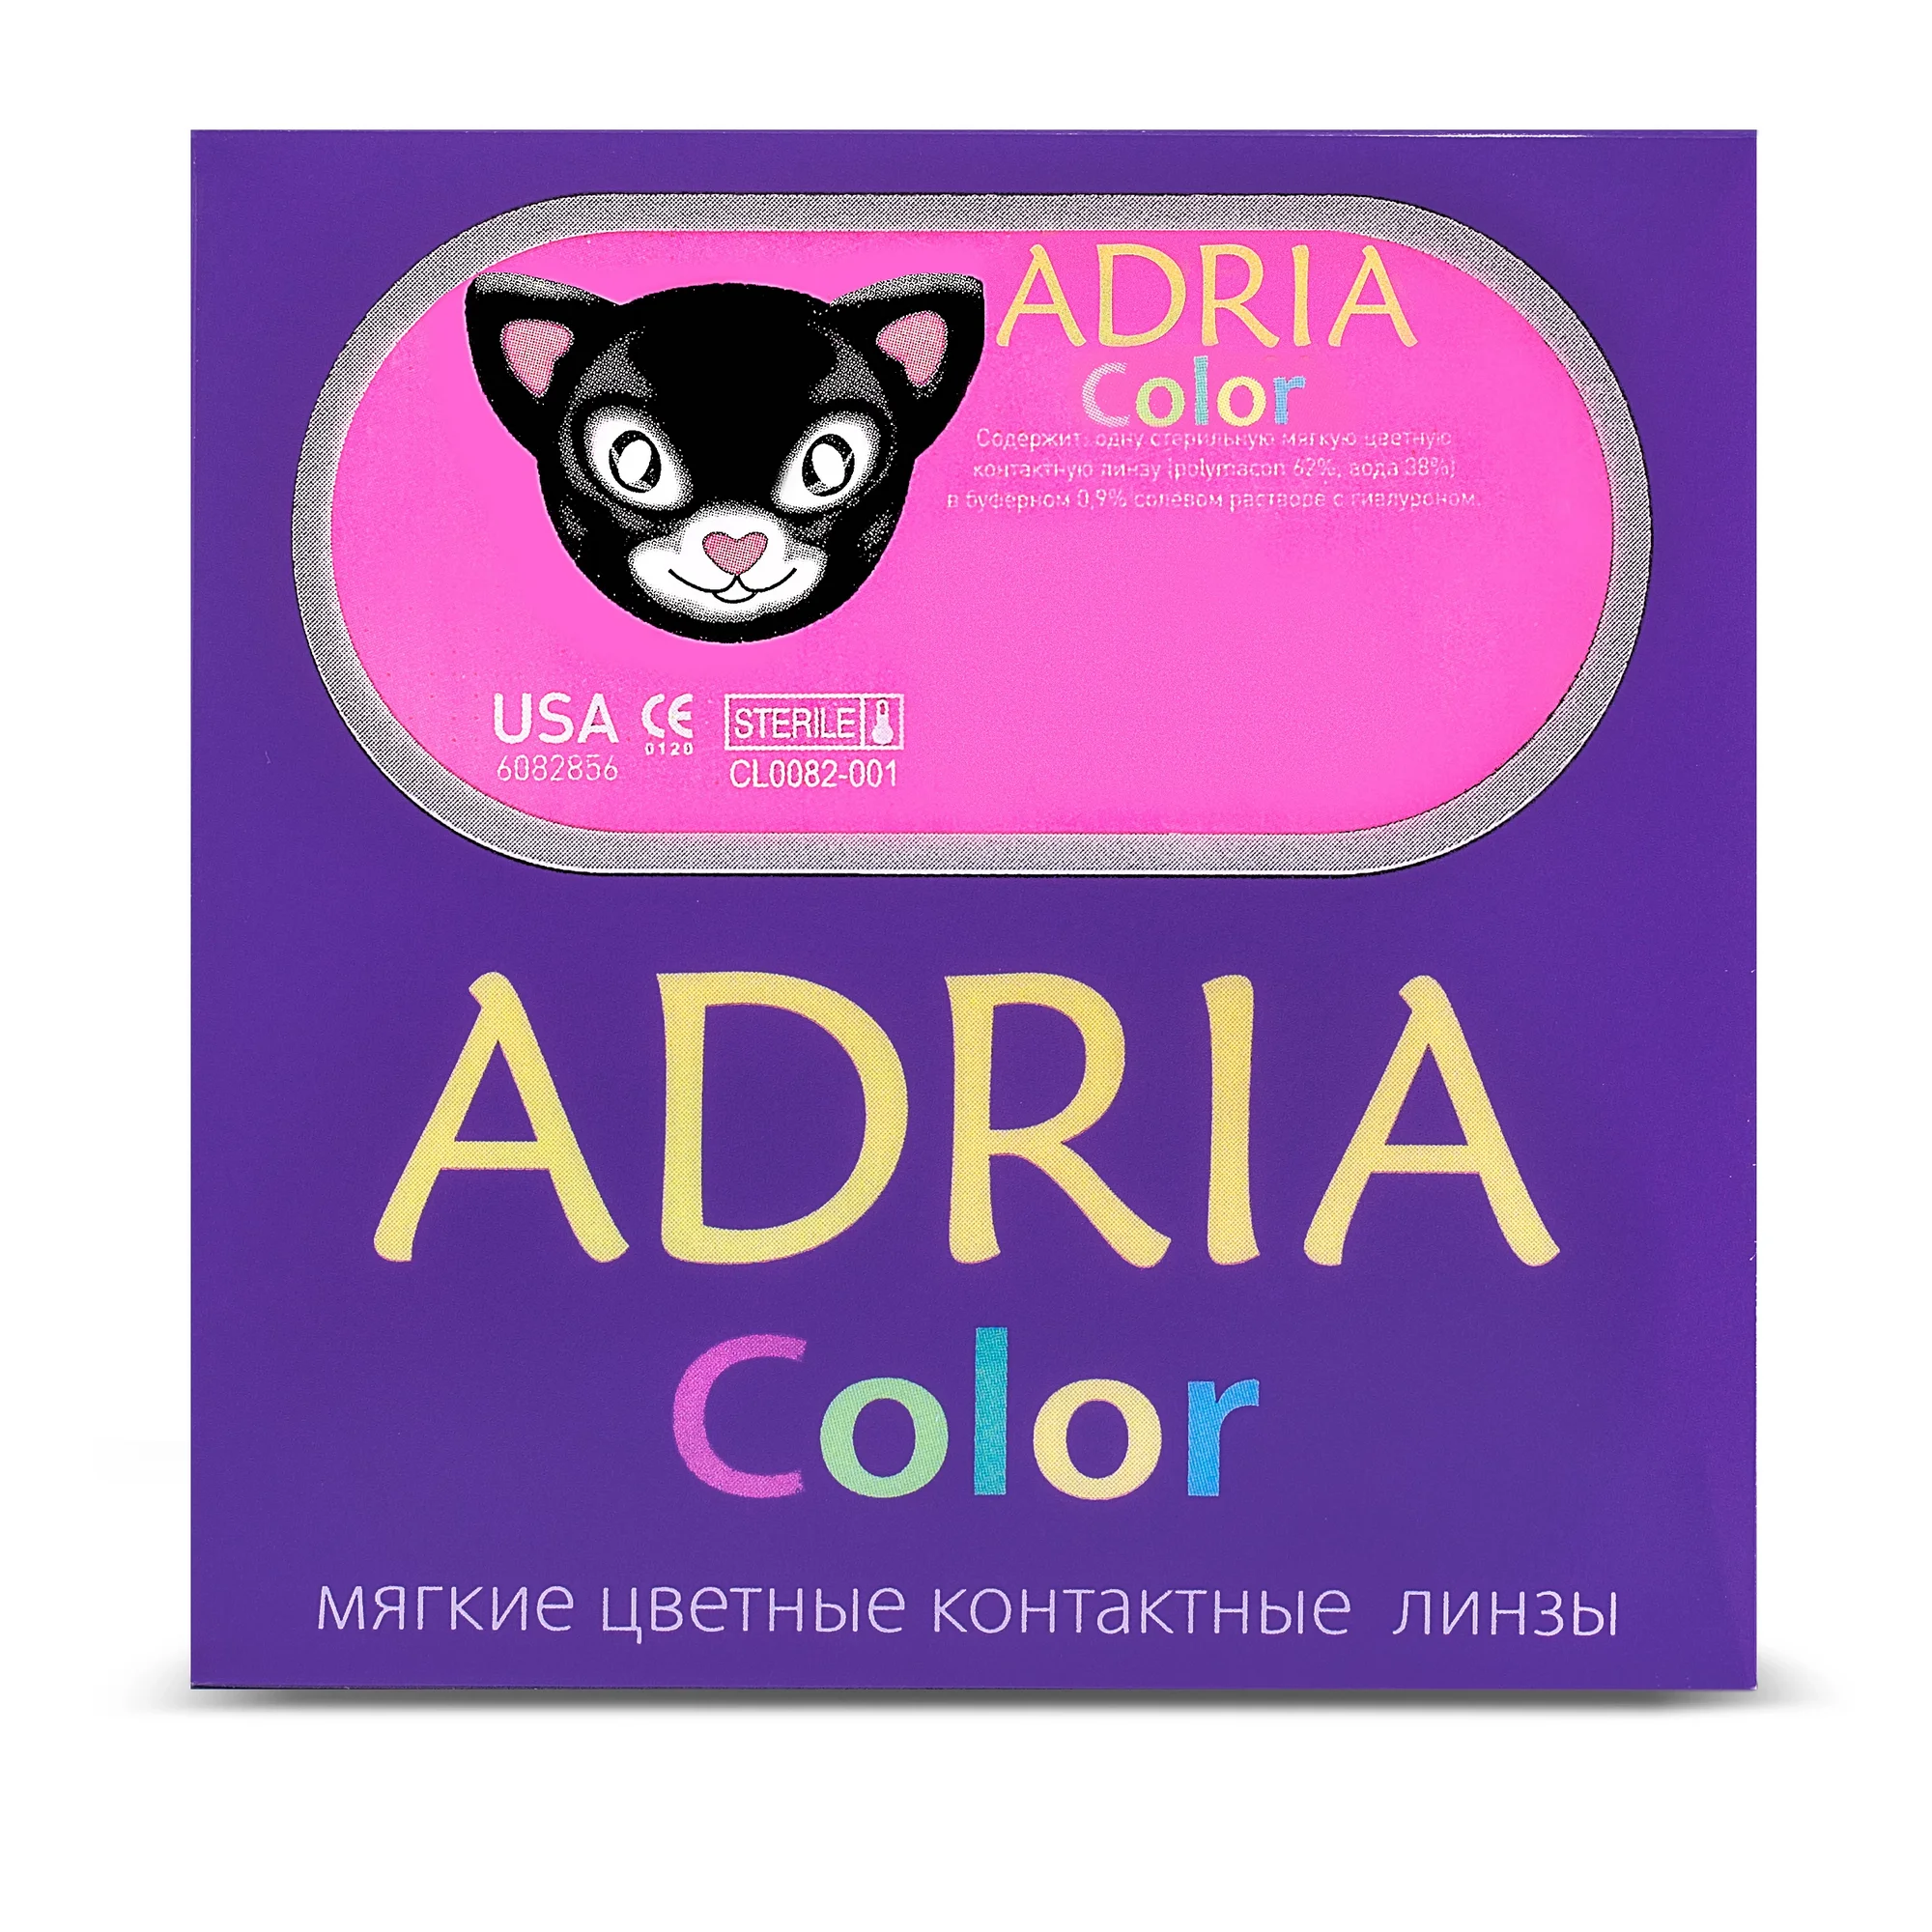 COLOR BOX ADRIA Color 2 Tone True Sapphire (голубой)